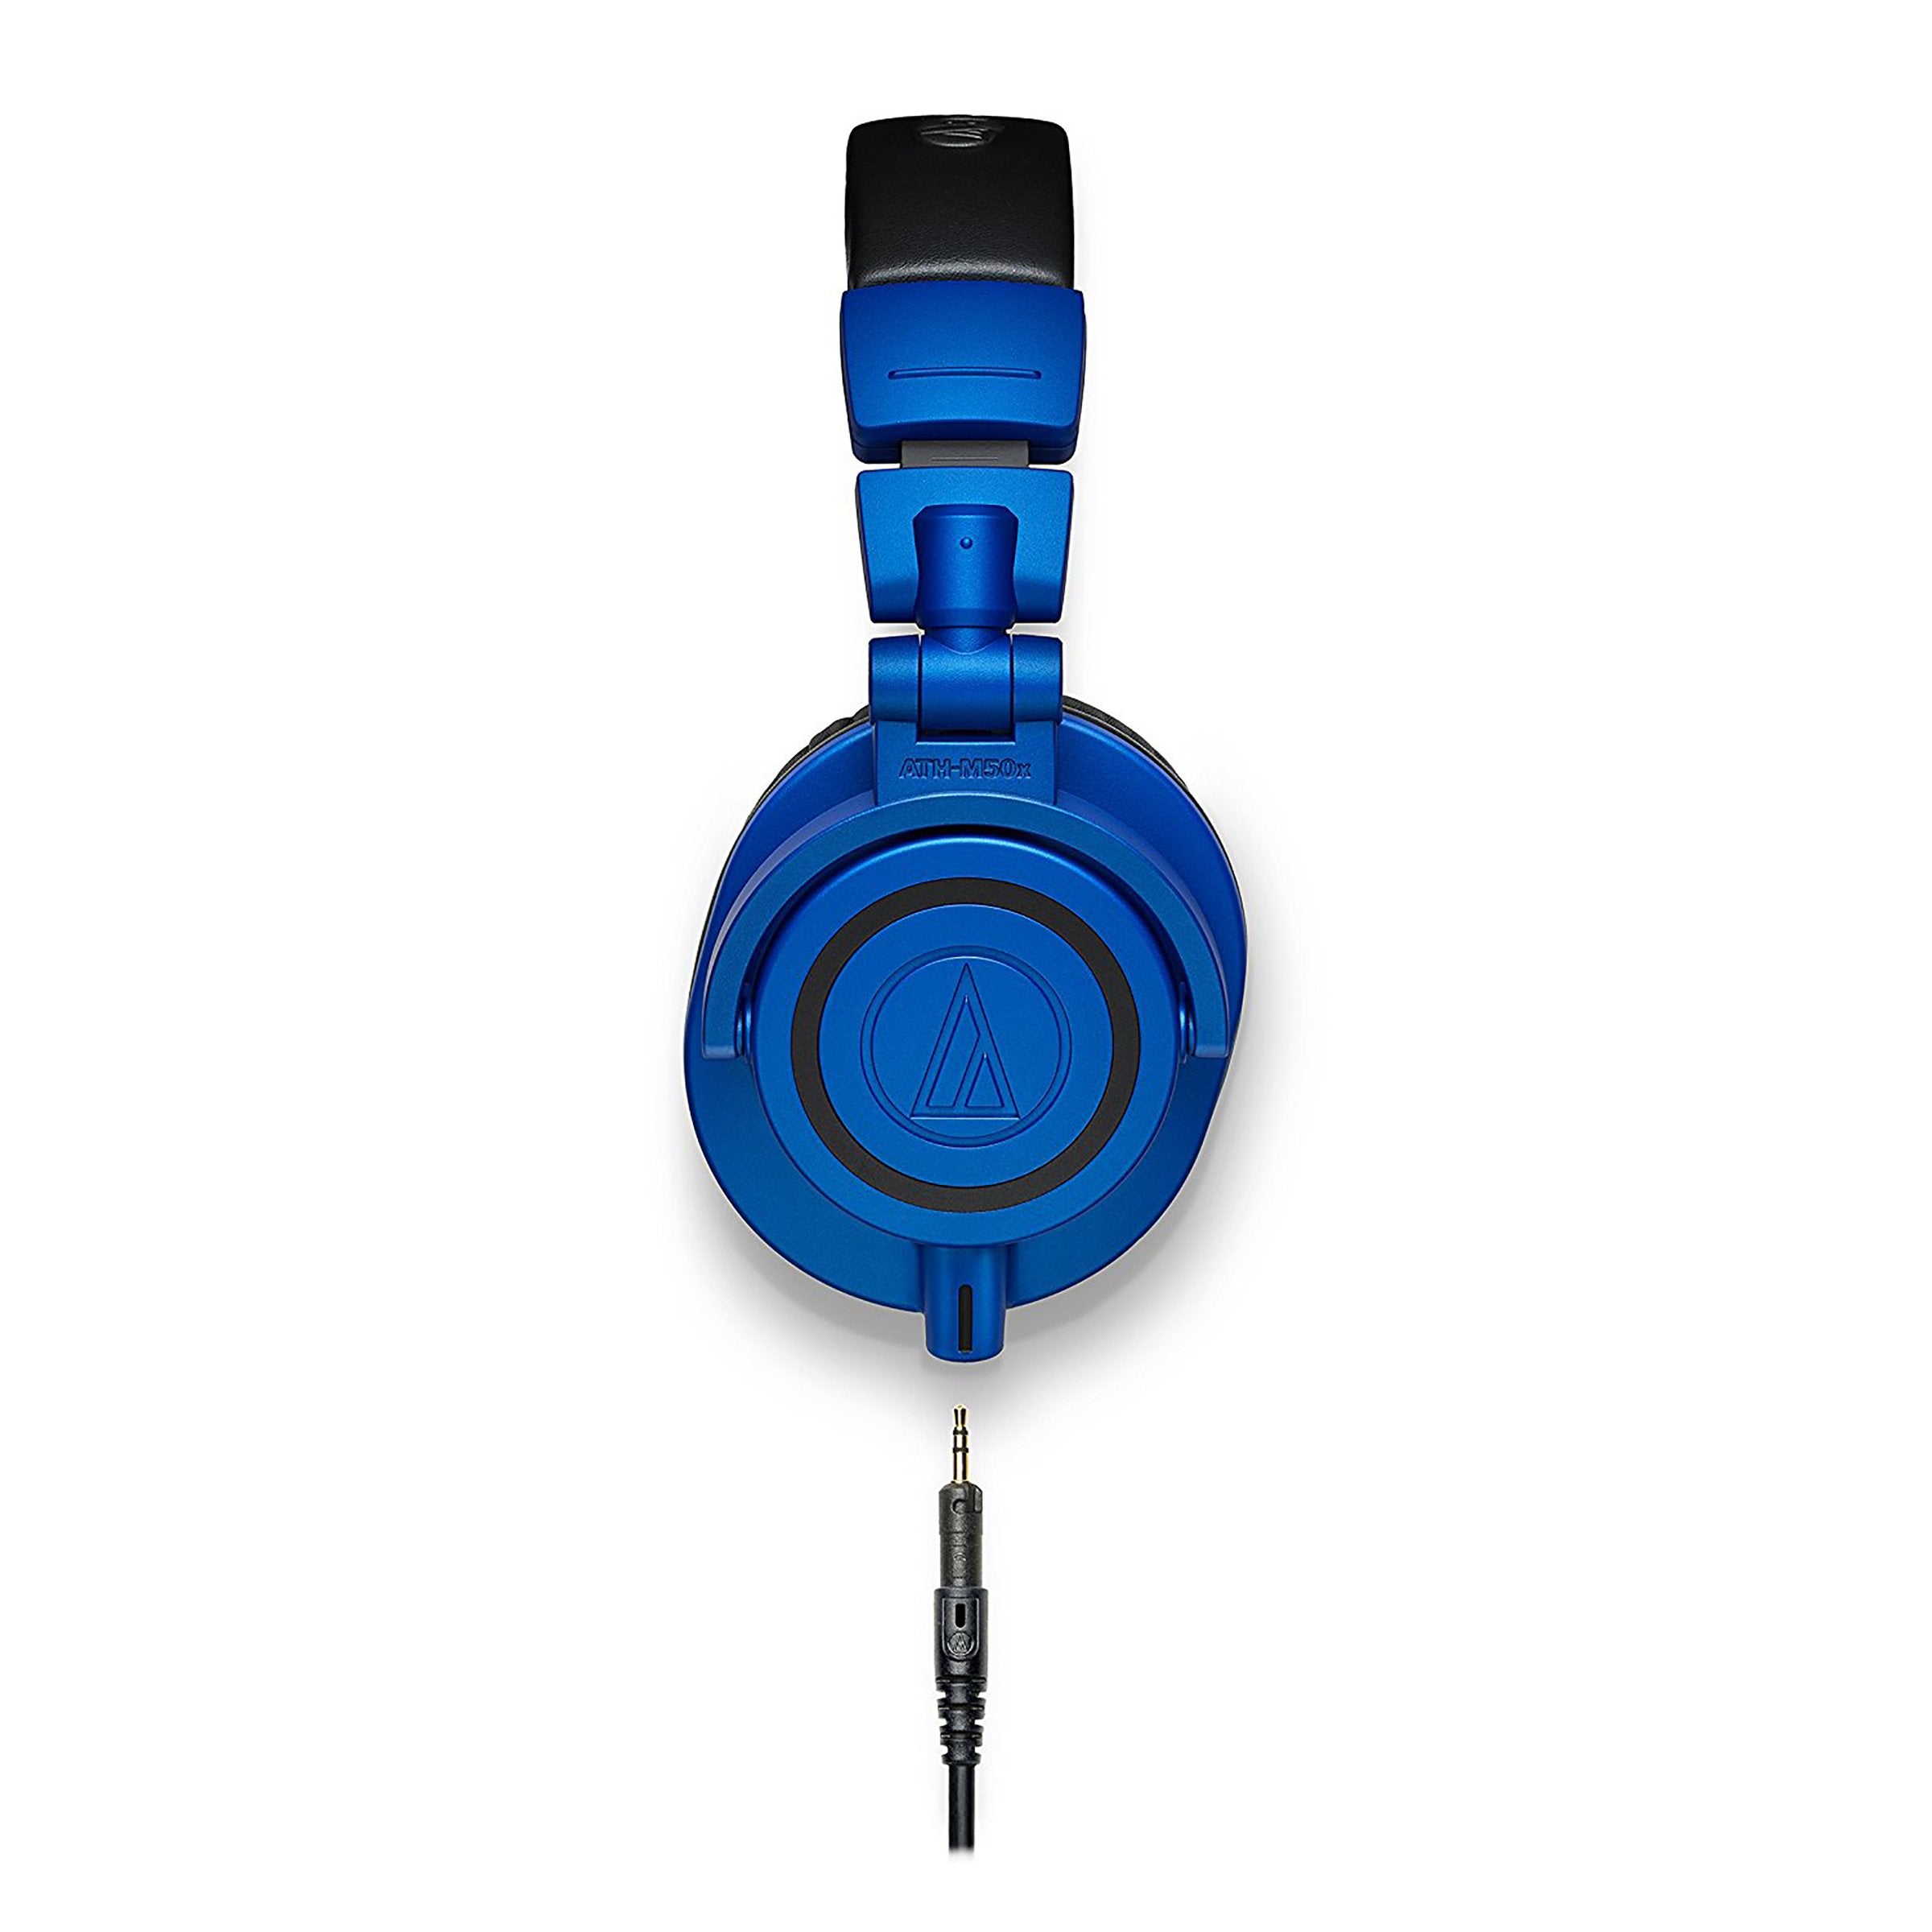 Audio-Technica: ATH-M50XBB Professional Monitor Headphones - Blue & Black